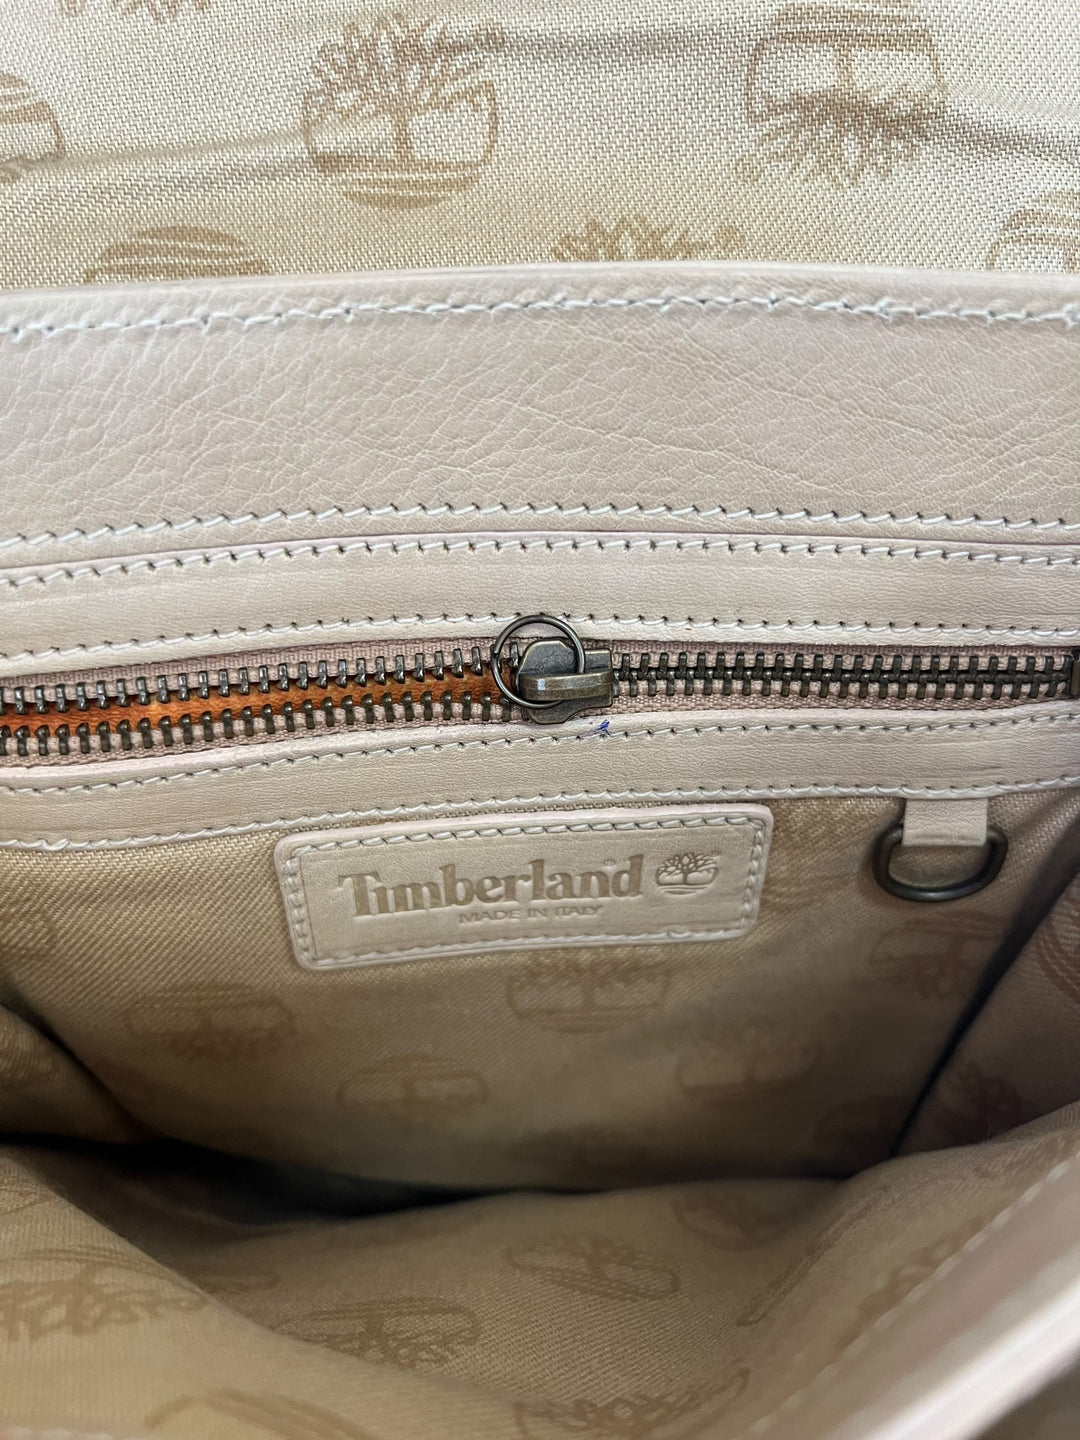 Timberland vintage leather crossbody bag